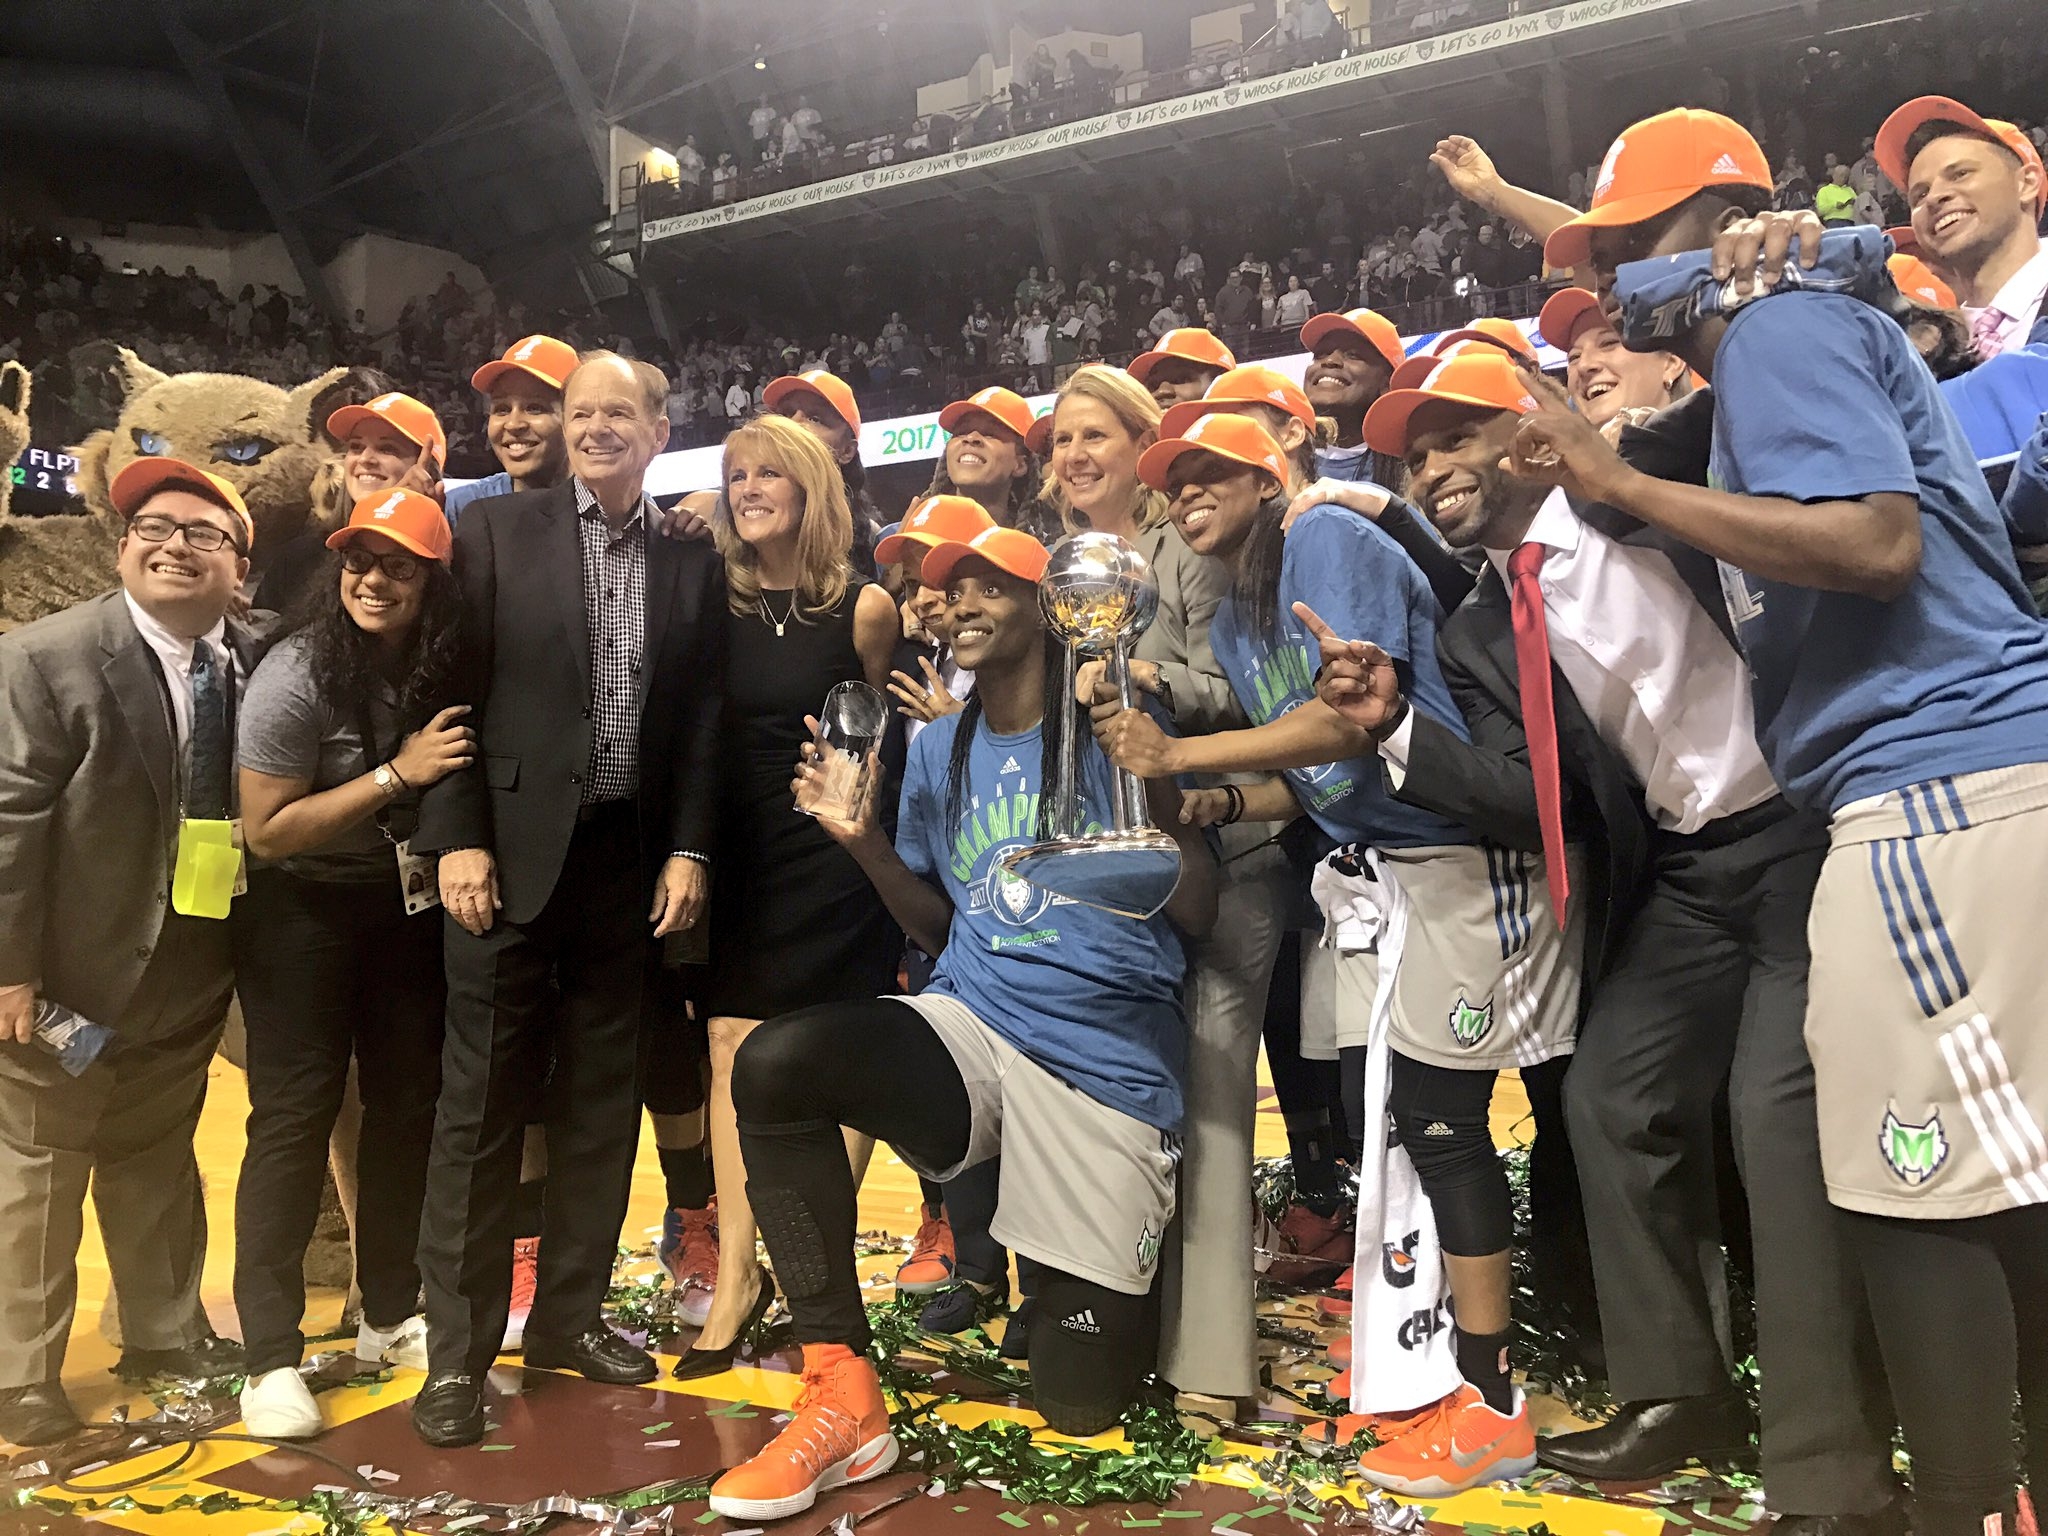 MINNESOTA DYNASTY: Lynx capture 4th WNBA title in past 7 seasons